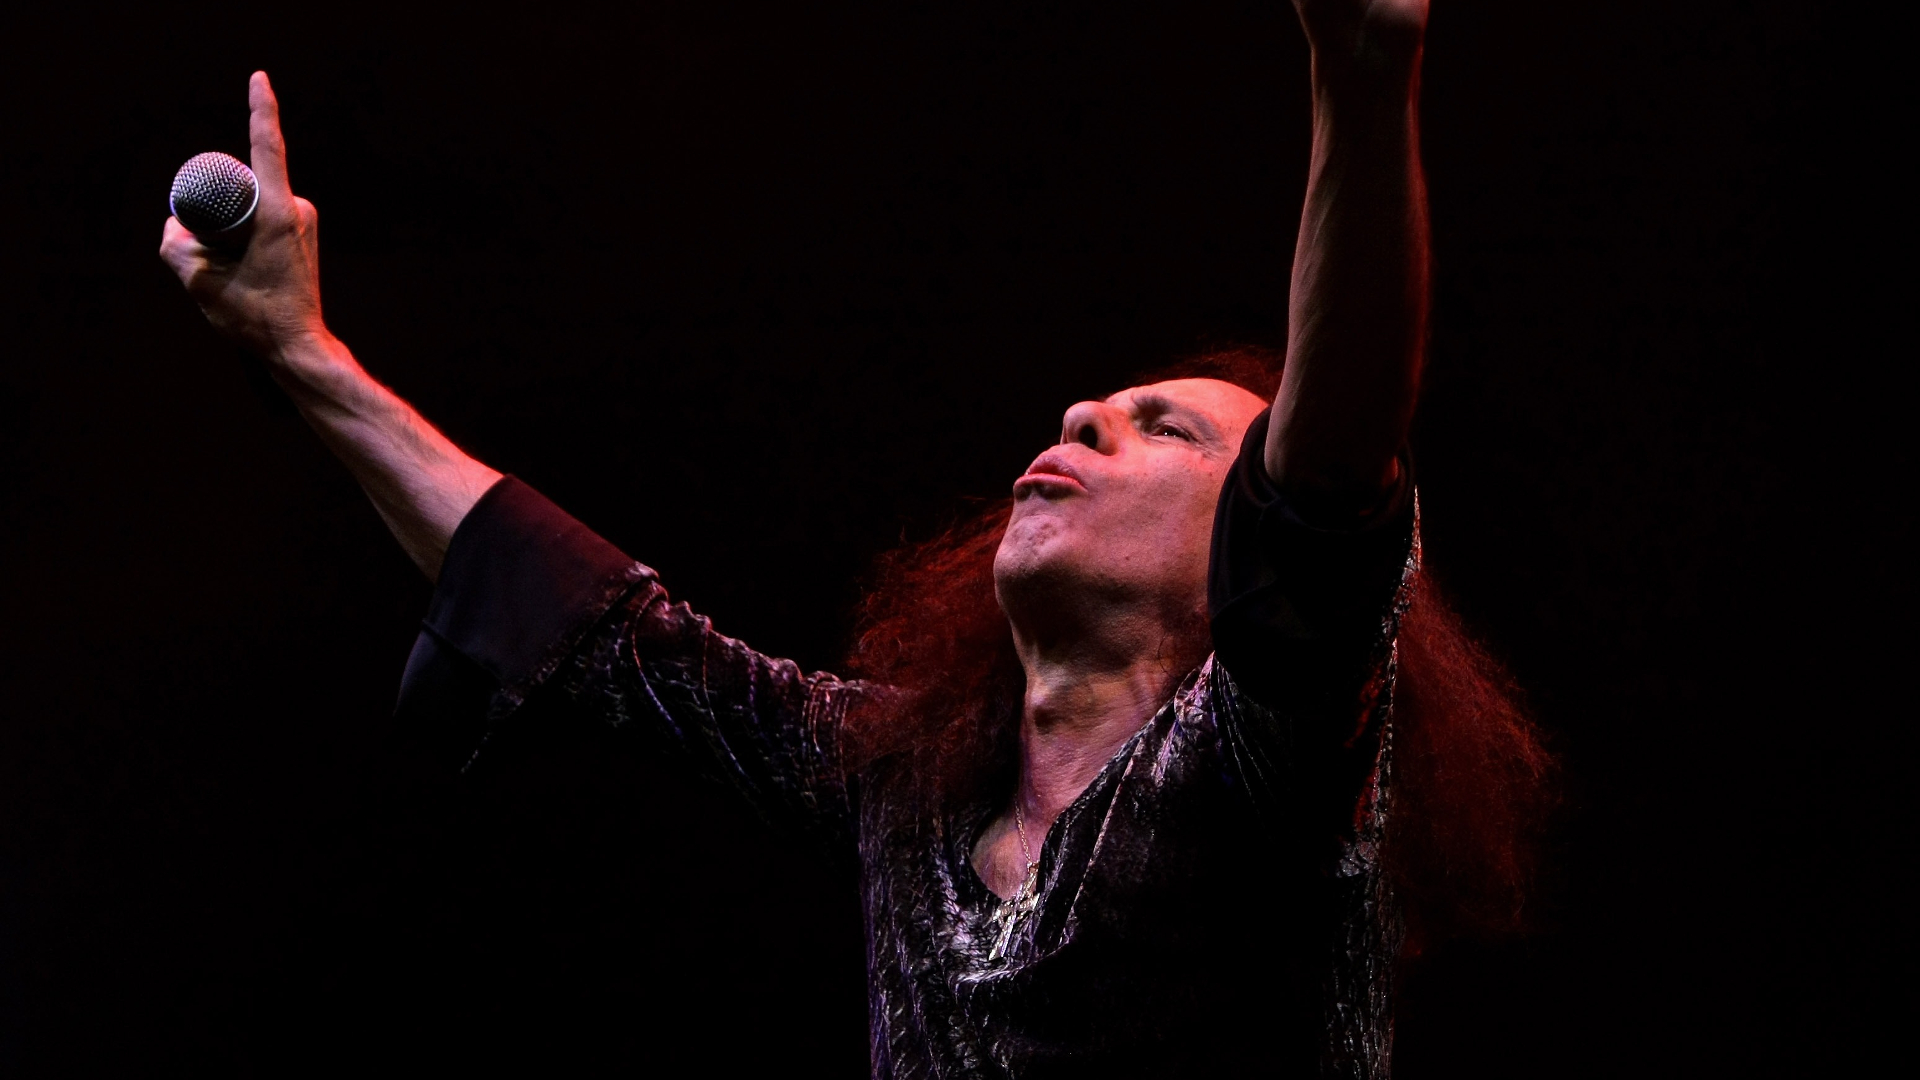 Fever Dreams av Ronnie James Dio